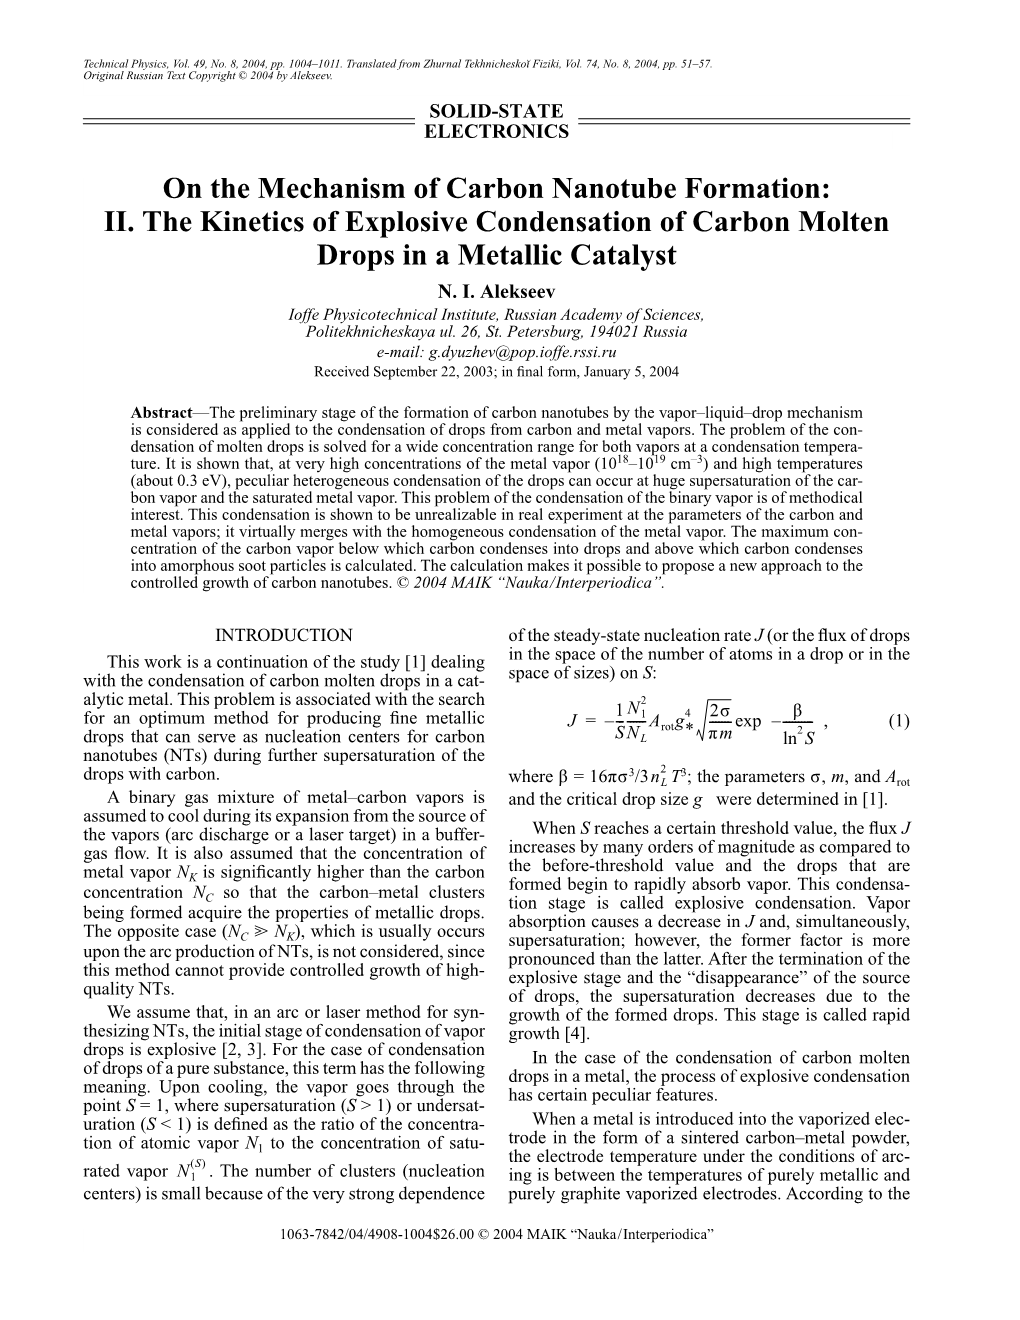 II. the Kinetics of Explosive Condensation of Carbon Molten Drops in a Metallic Catalyst N